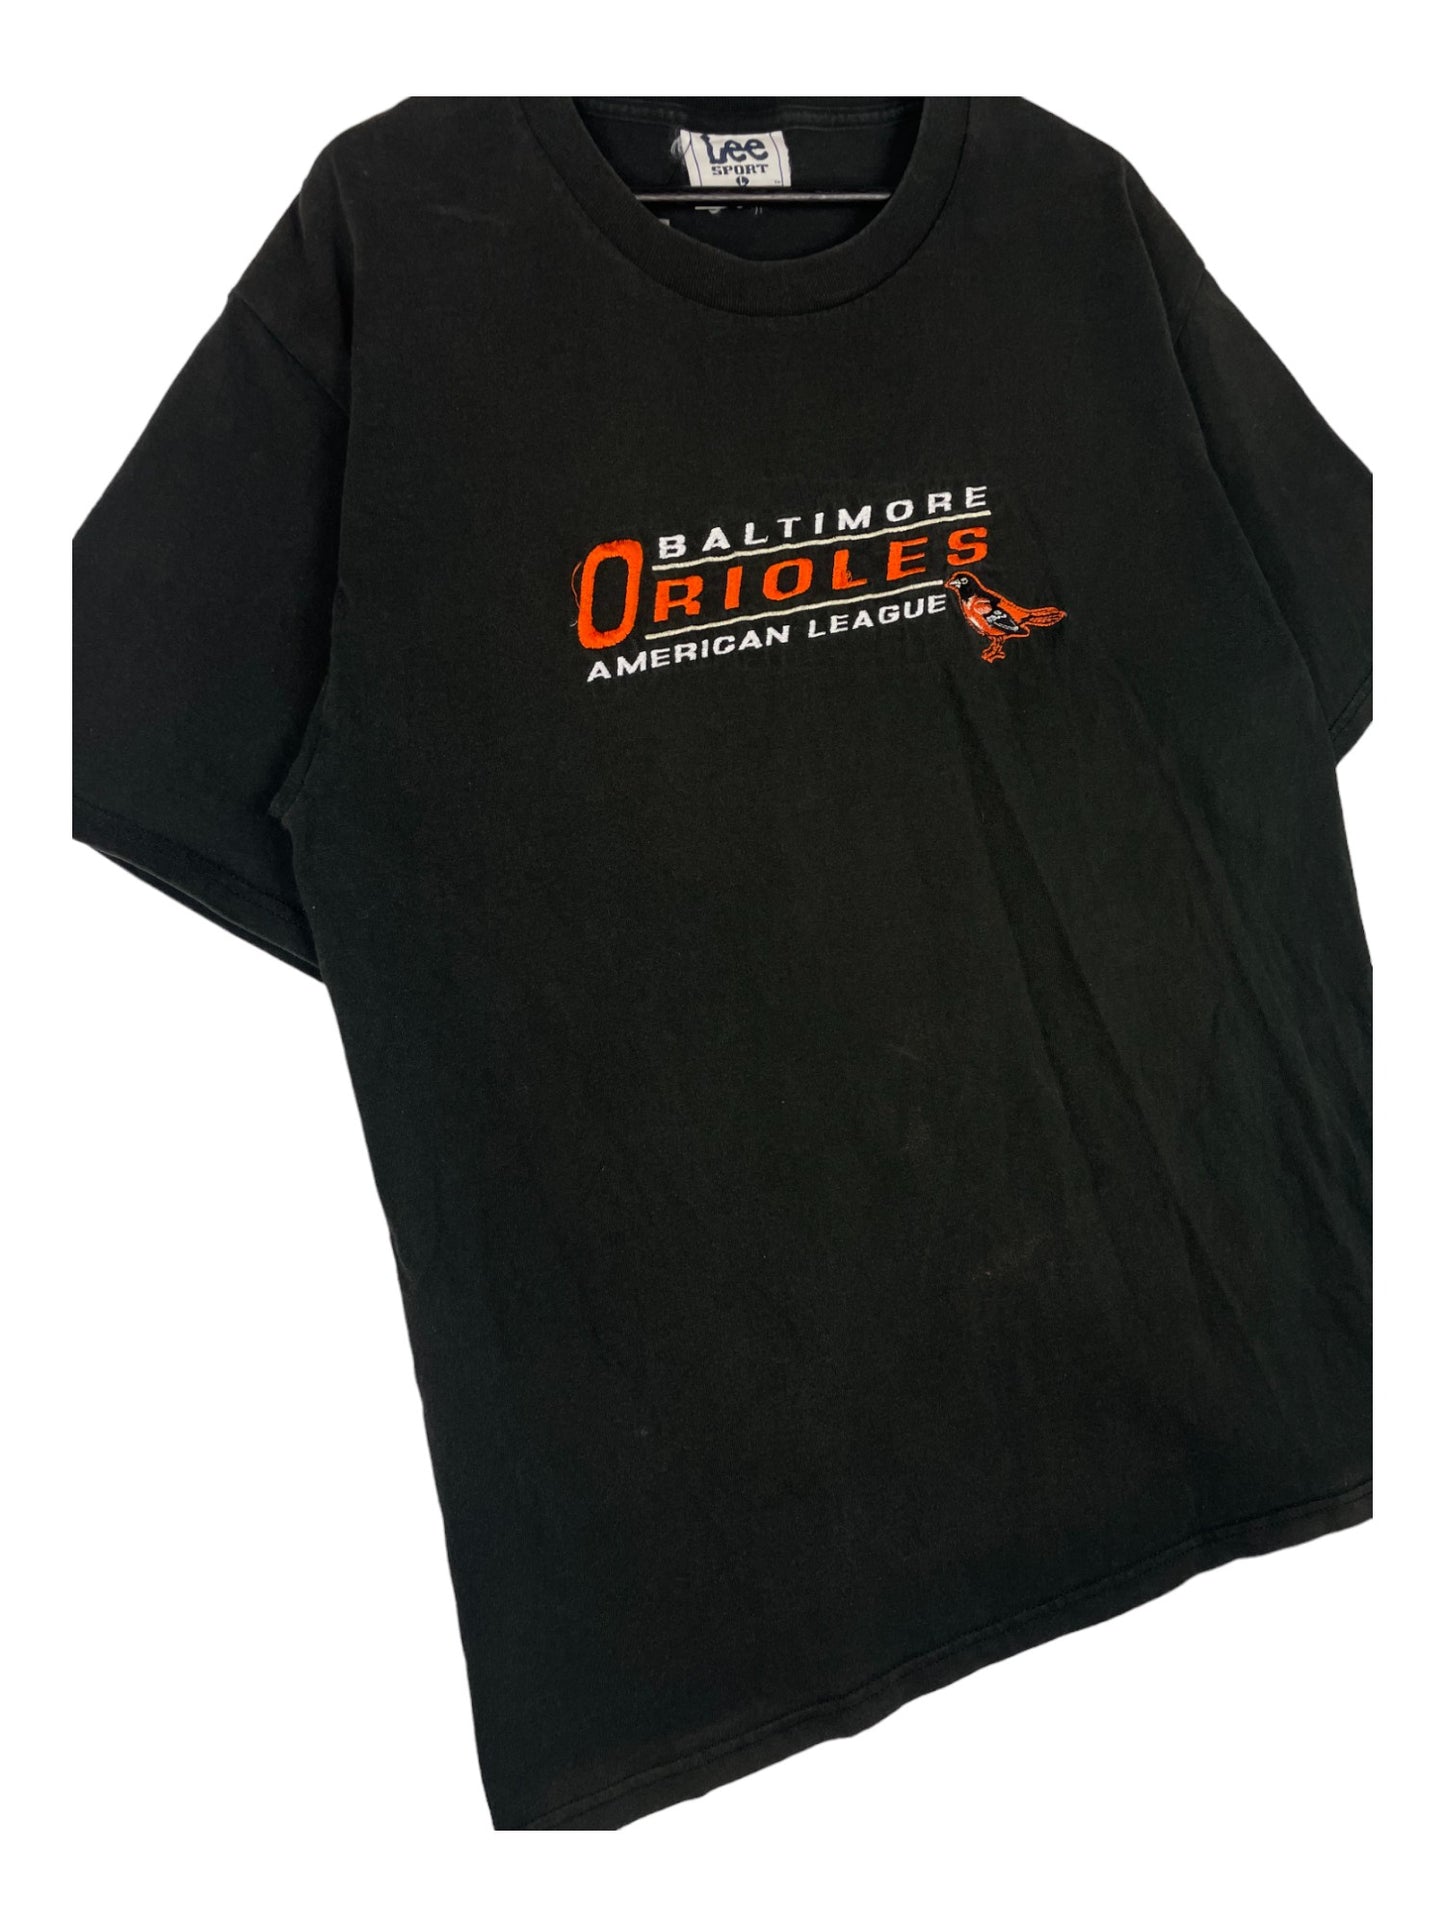 Oriole T-Shirt